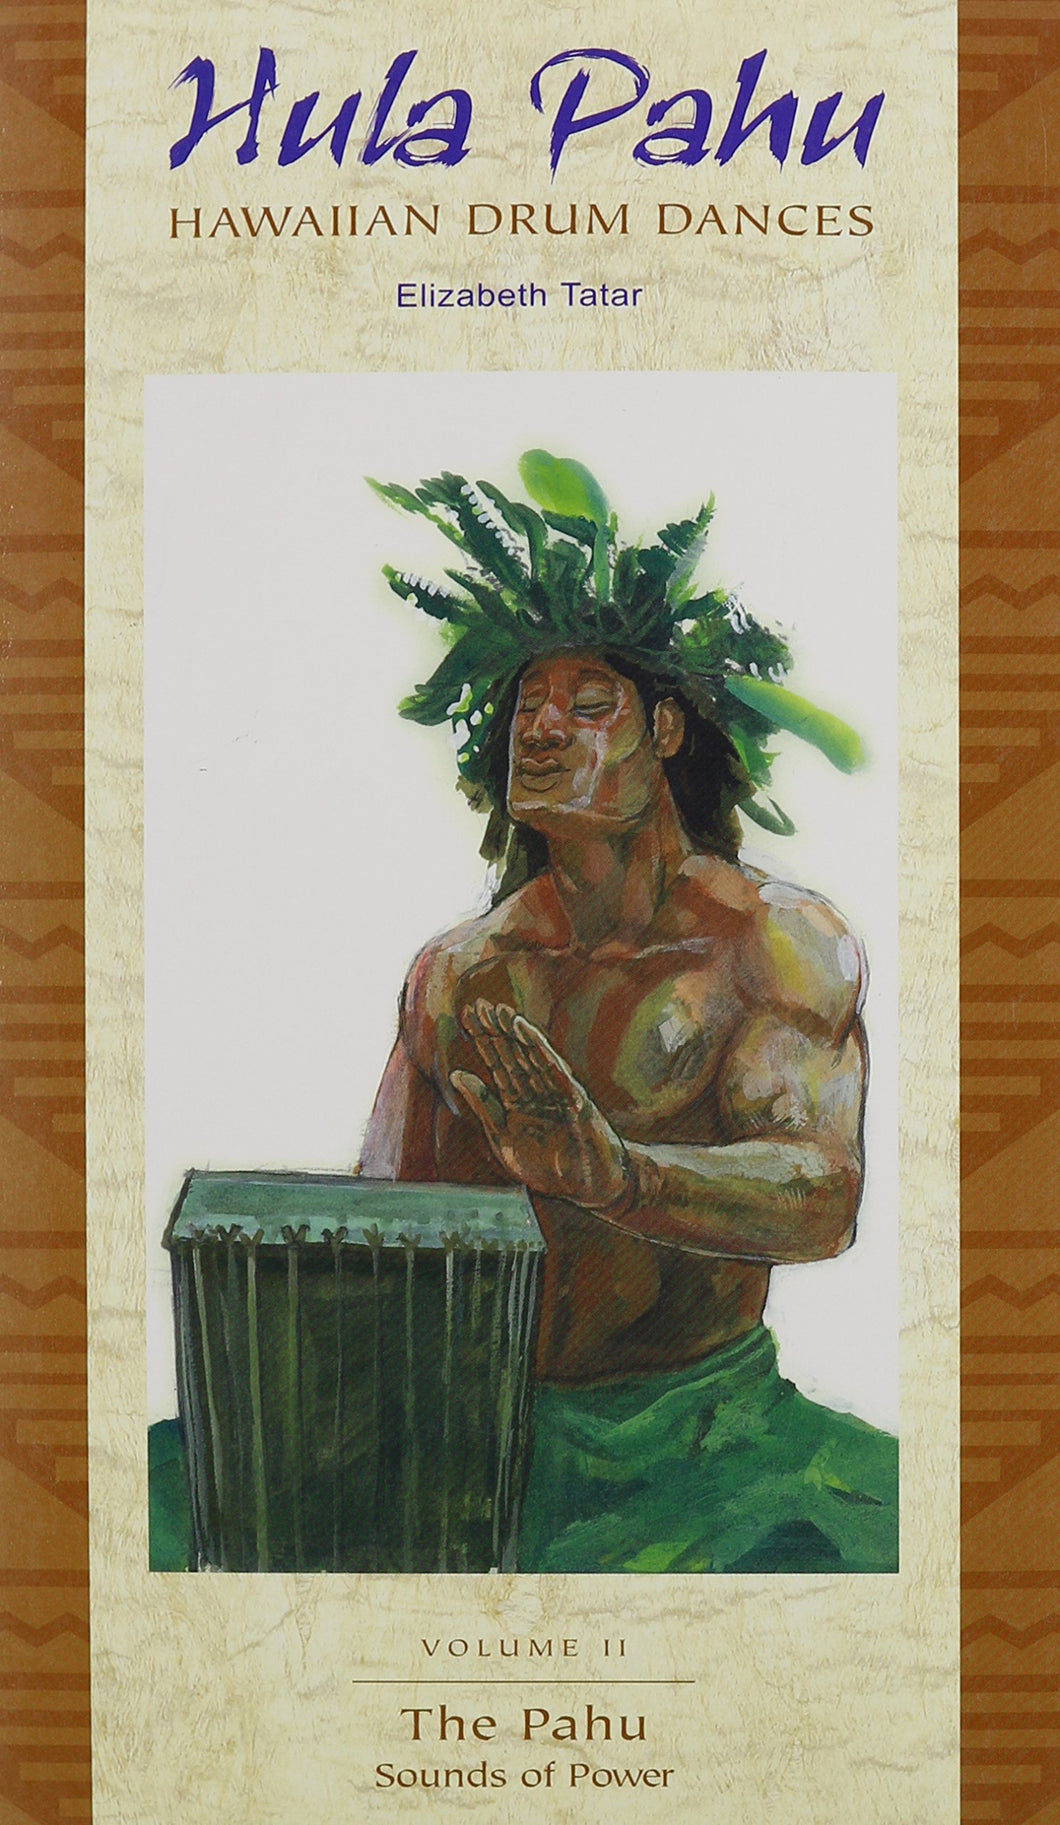 Hula Pahu, Hawaiian Drum Dances, Volume II: The Pahu, Sounds of Power by Elizabeth Tatar